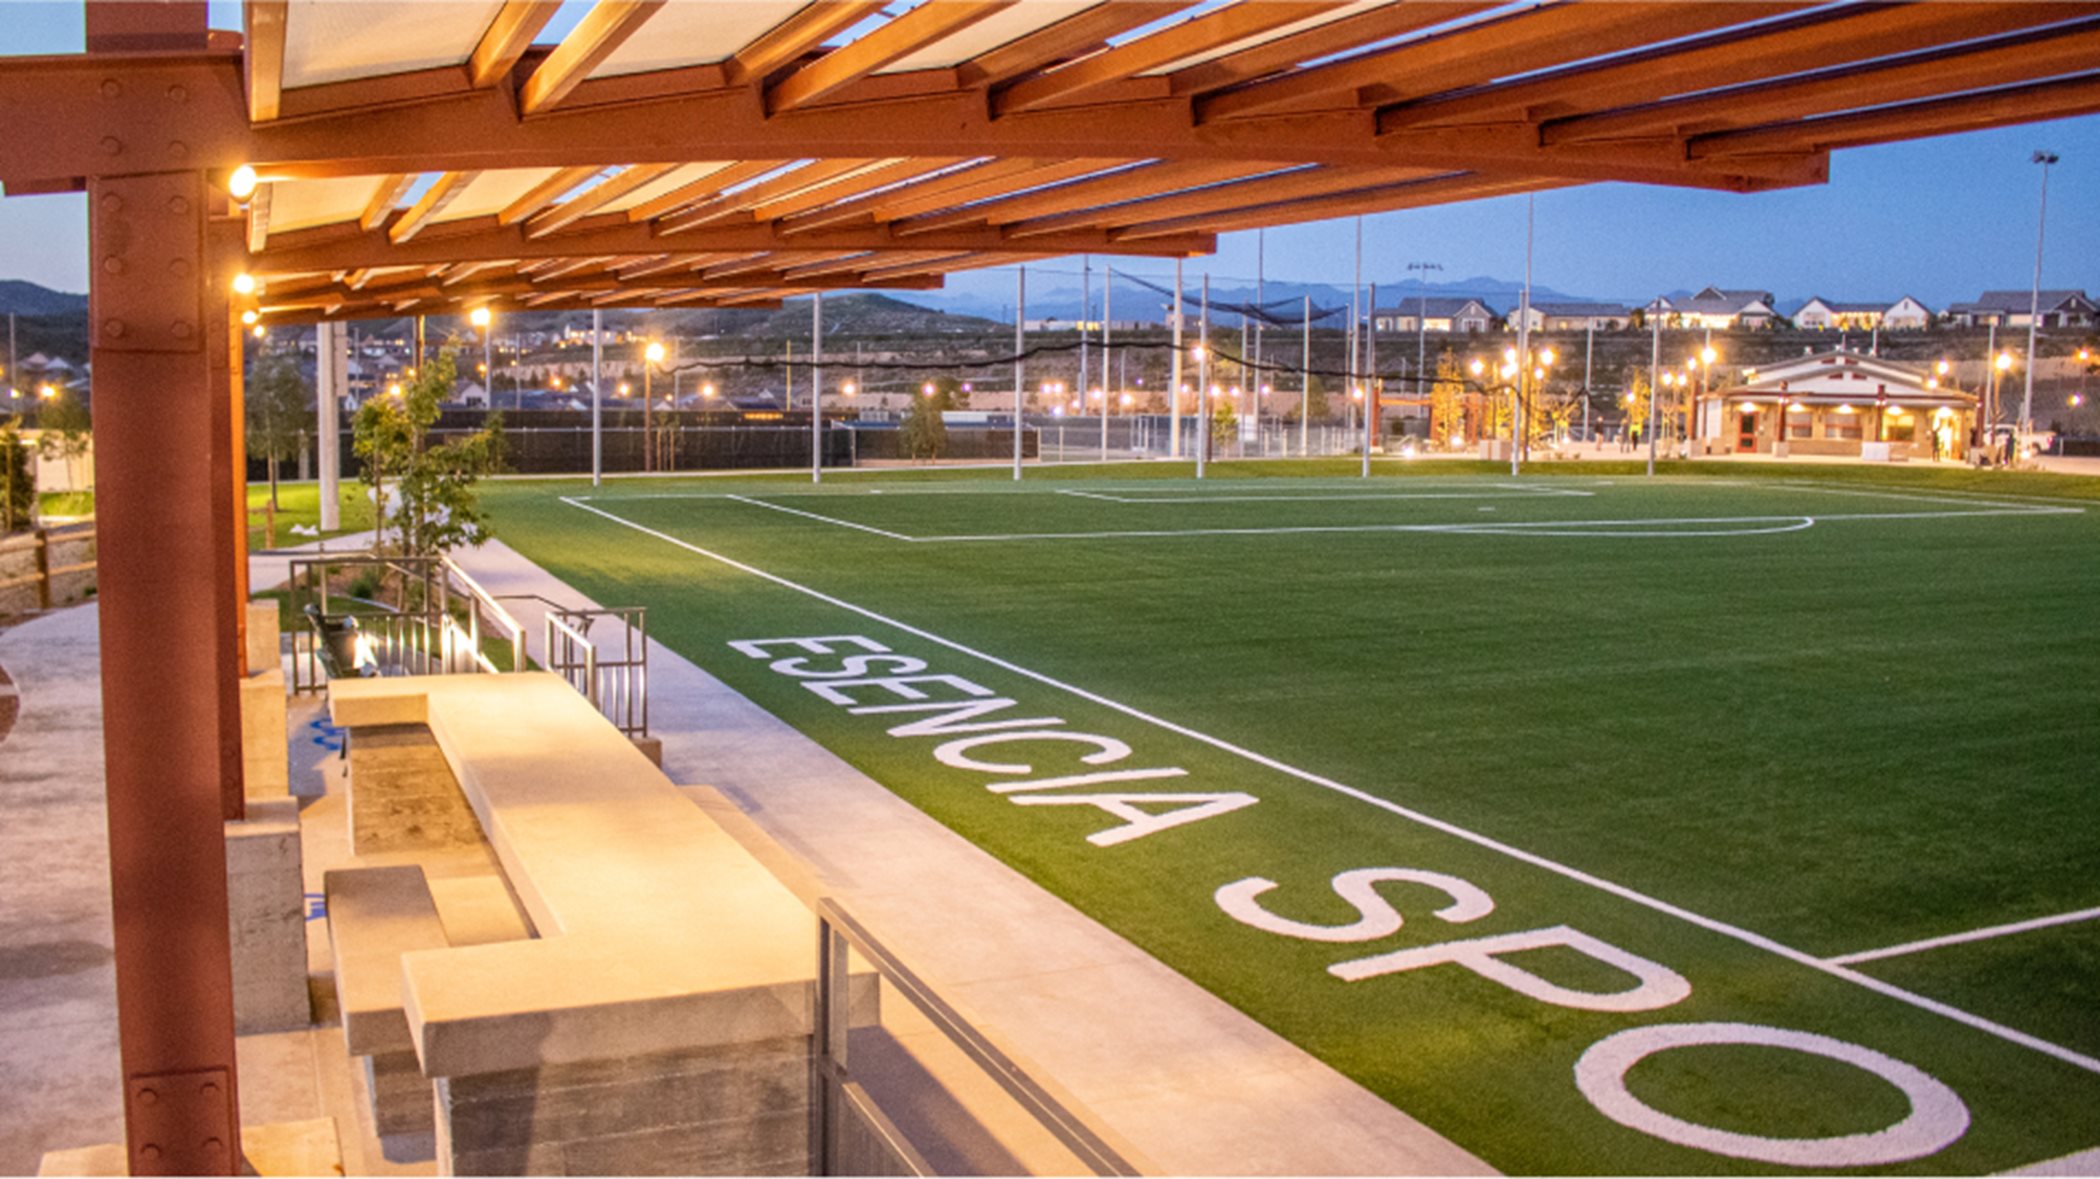 Soccer field at Escencia Sports park